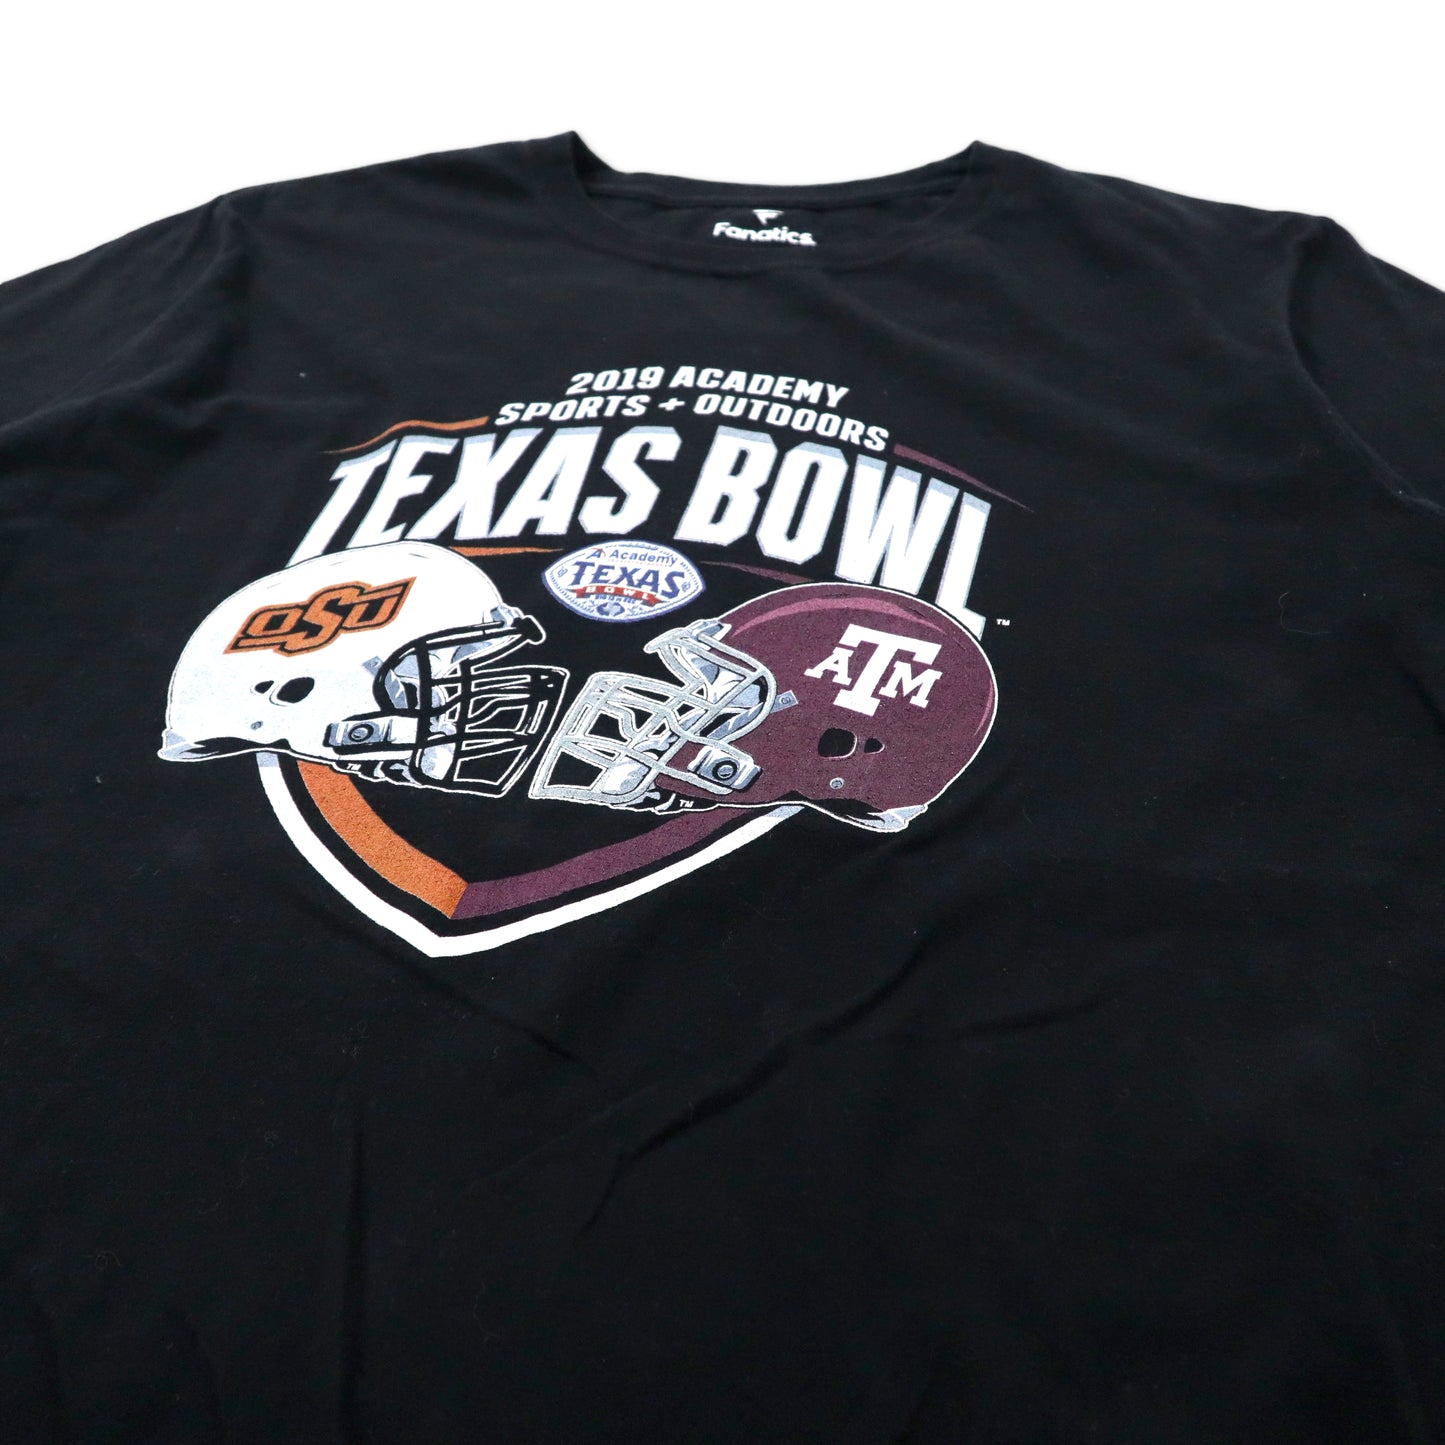 NCAA Texas Bowl プリントTシャツ L ブラック コットン Fanatics